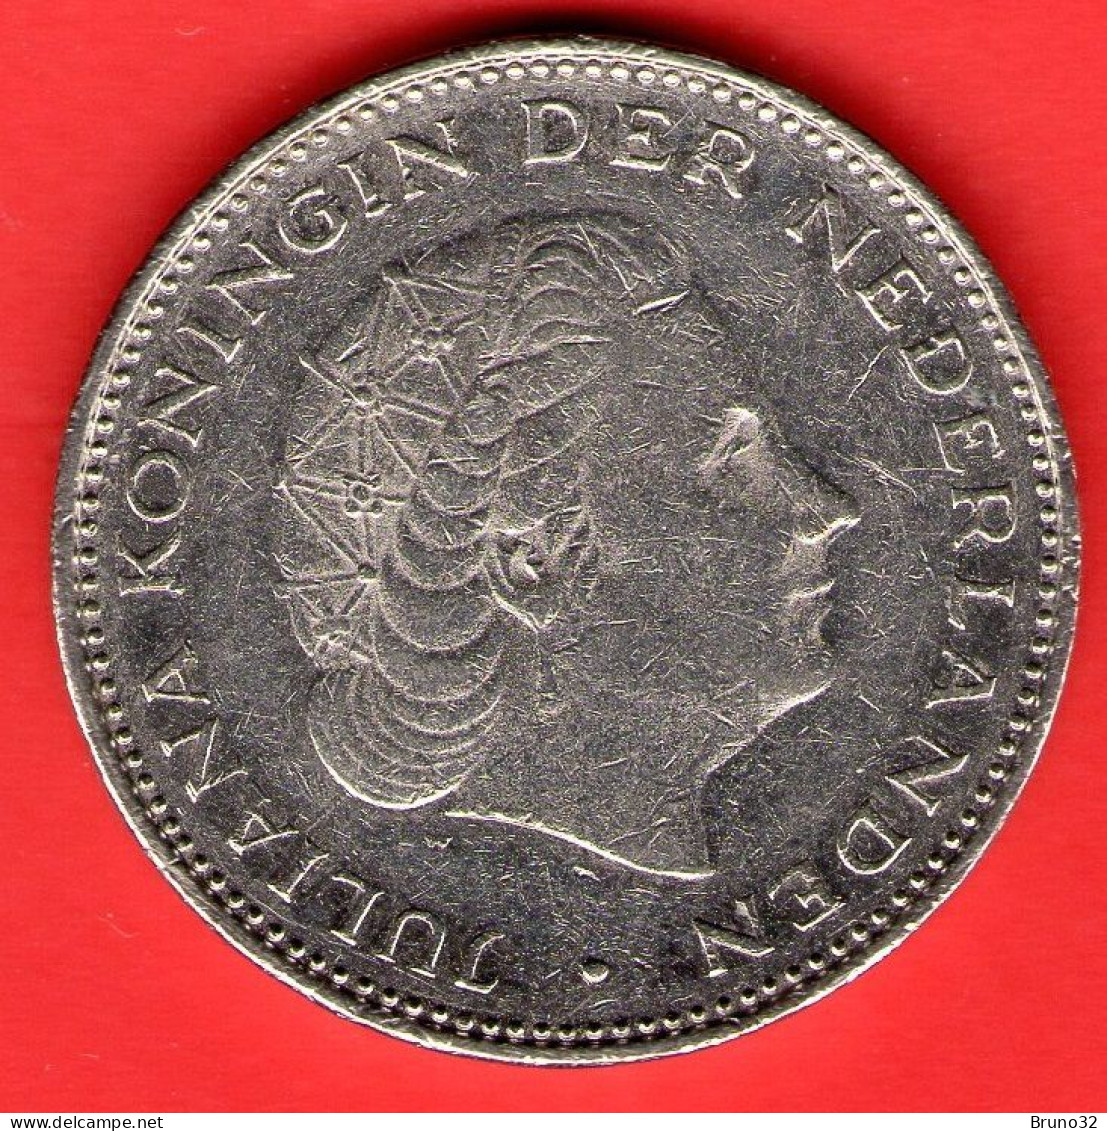 Paesi Bassi - Nederland - Pays Bas - 1980 - 2 1/2 Gulden - SPL/XF - Come Da Foto - 1948-1980 : Juliana